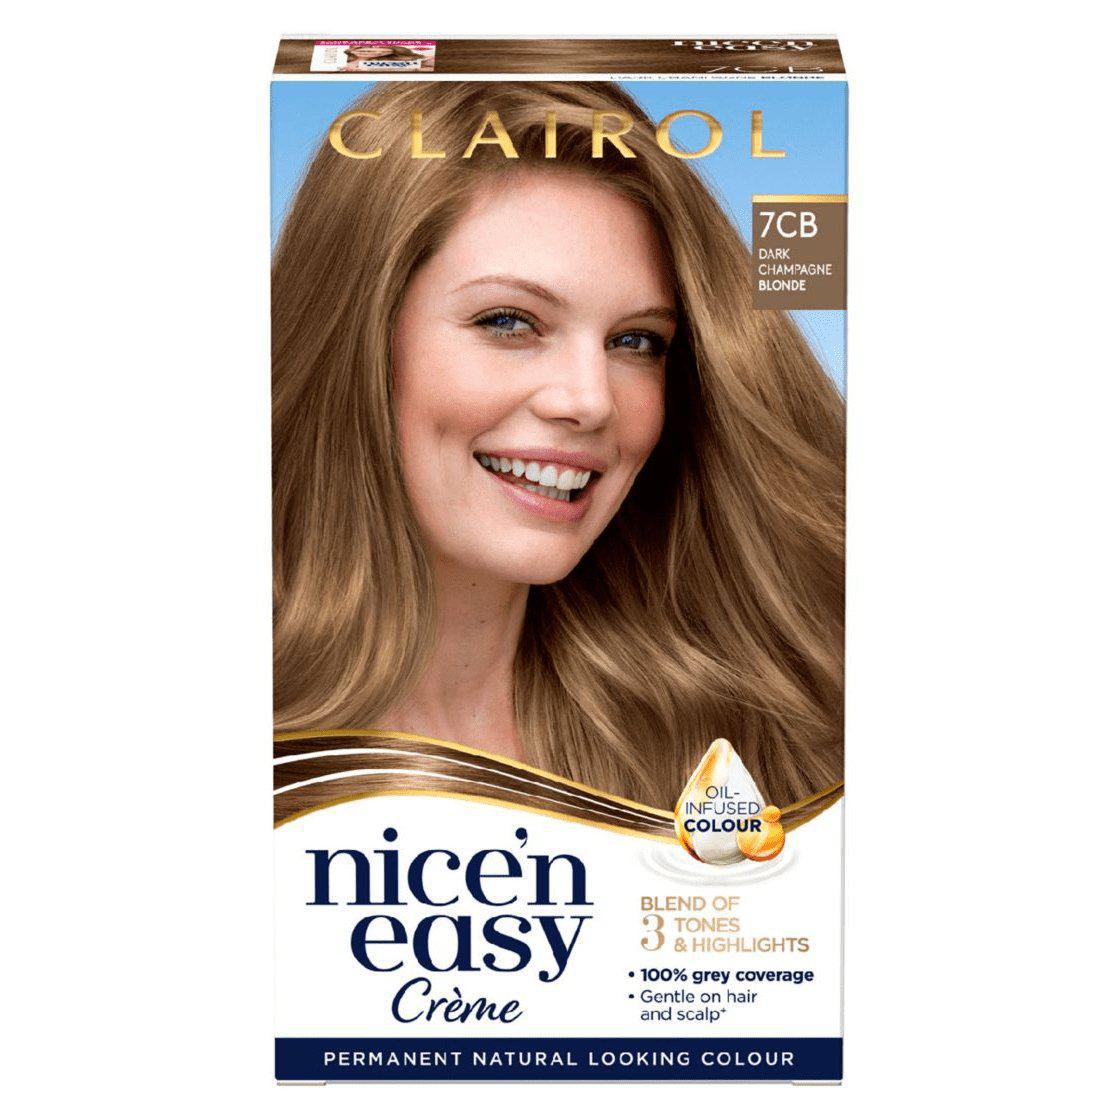 Clairol Nice N Easy Crème Natural Permanent Hair Dye - 7CB Dark Champagne Blonde - Healthxpress.ie